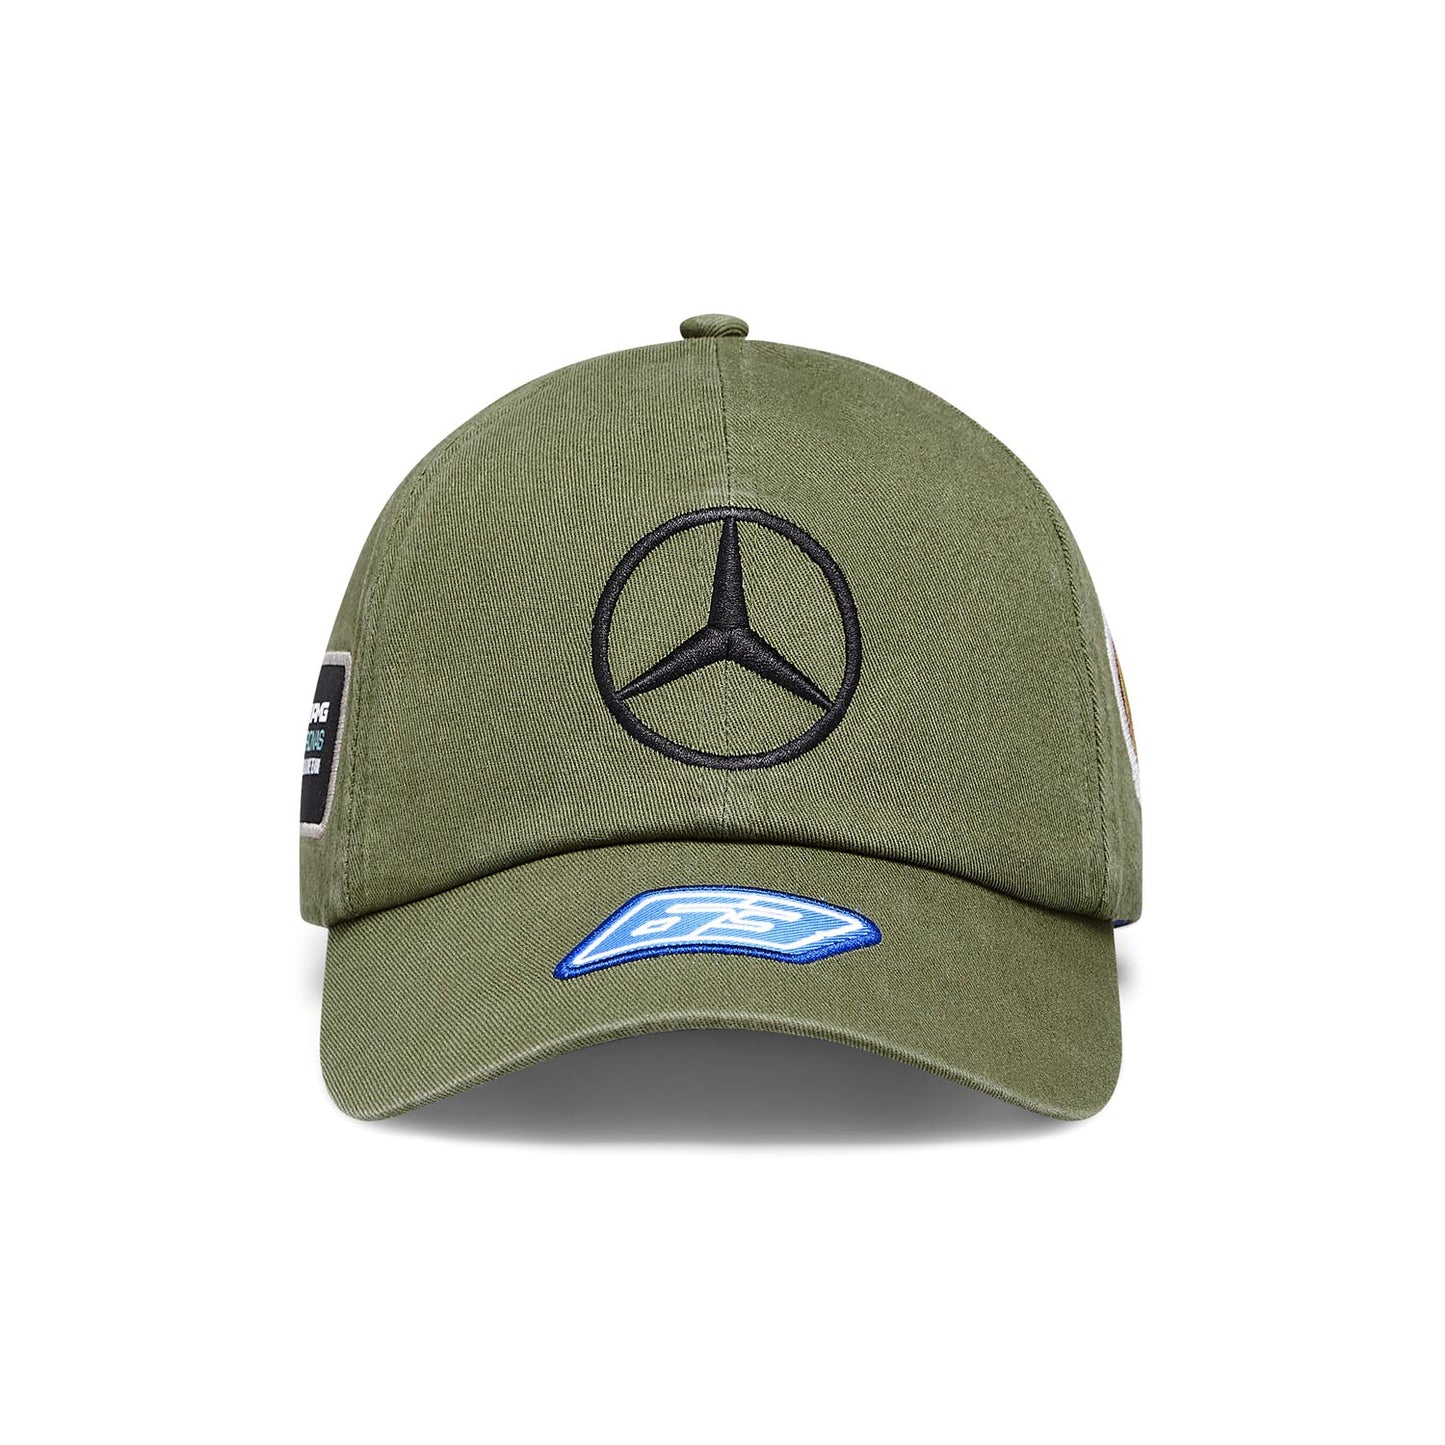 2023 Mercedes AMG Petronas Russell Austin baseball cap